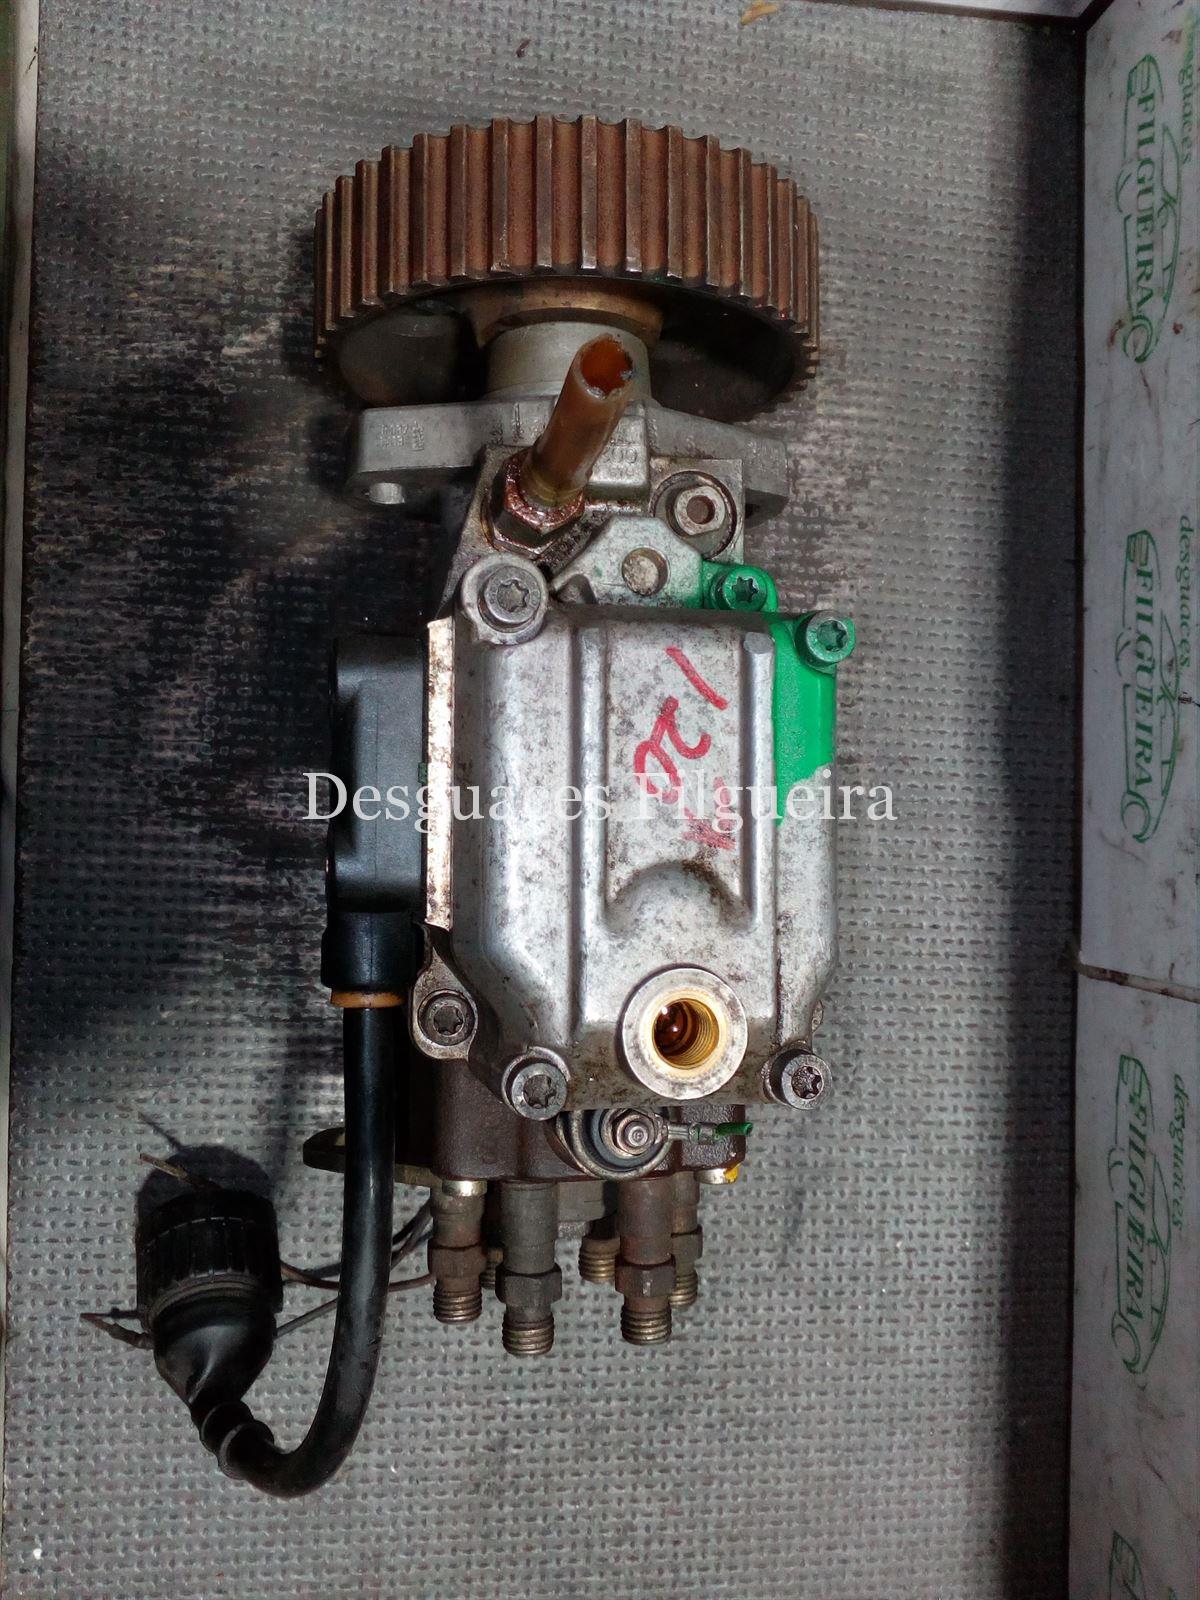 Bomba inyectora Bosch de BMW E28 serie 5 524td - Imagen 4